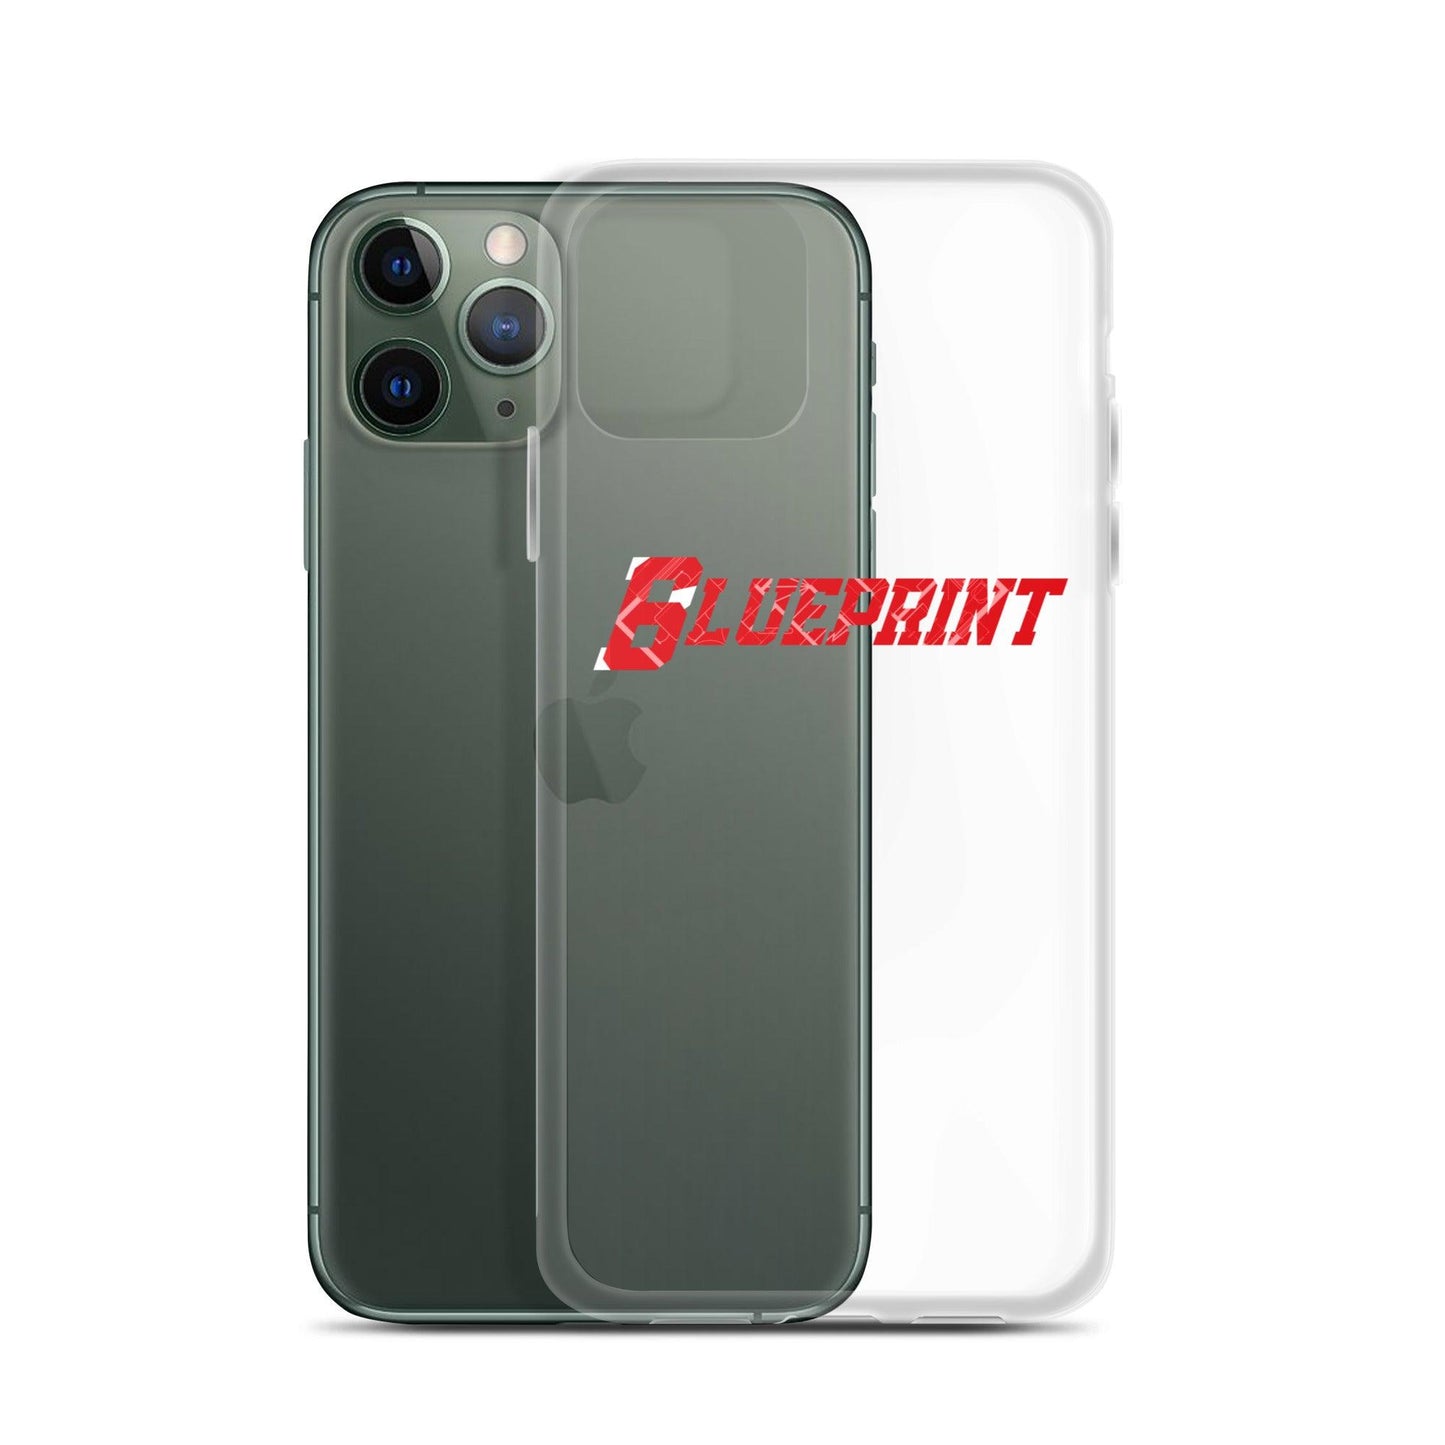 Kenny McIntosh "6lueprint" iPhone Case - Fan Arch